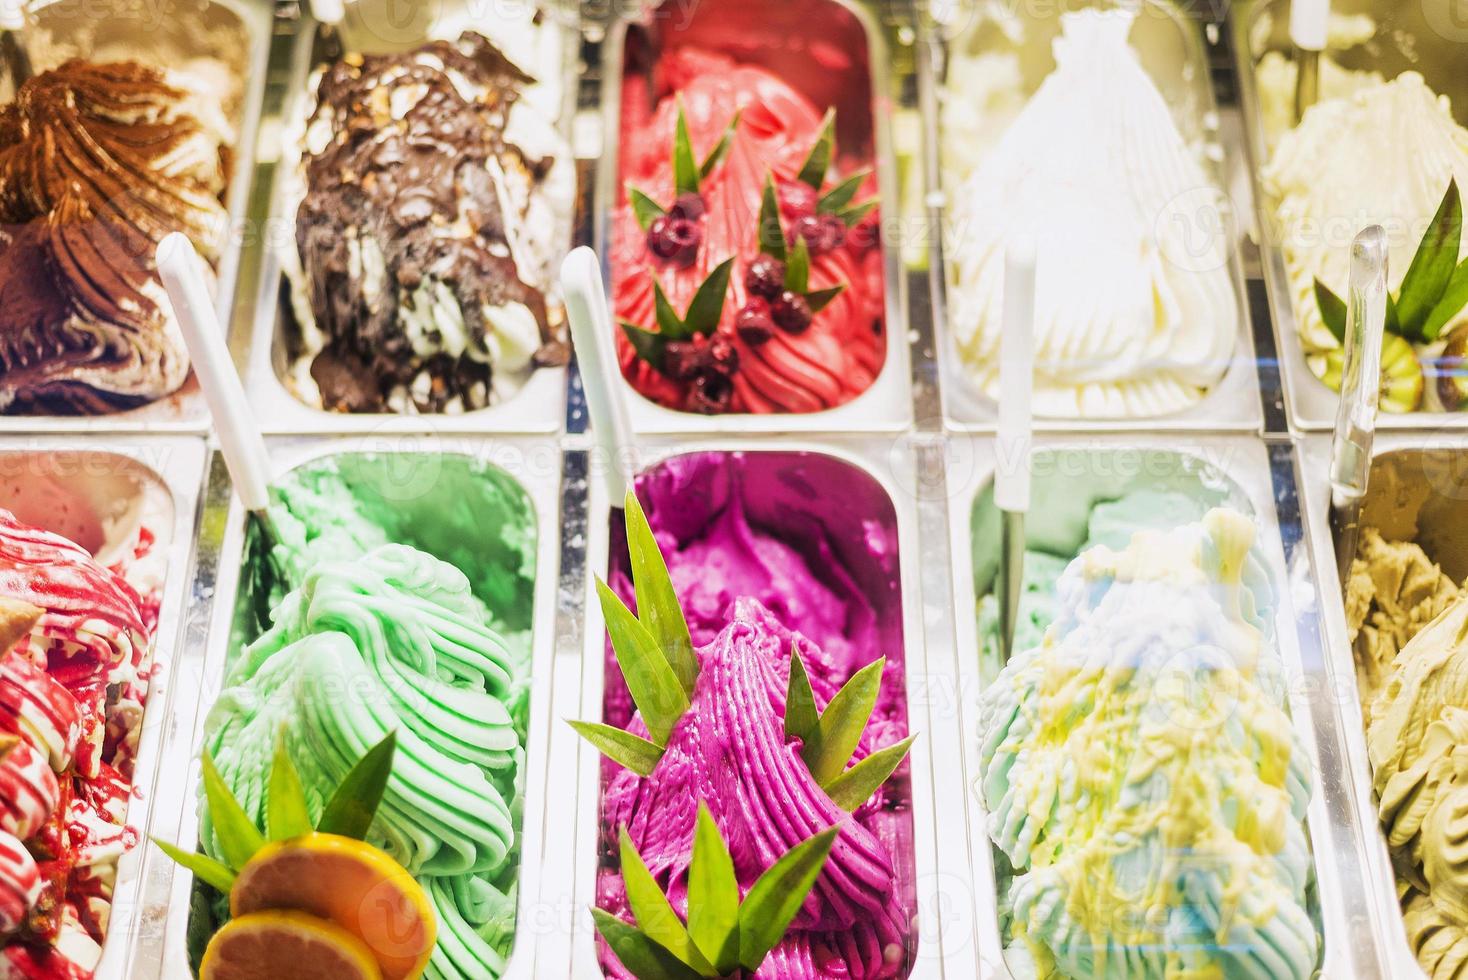 Classic Italian gourmet gelato gelato ice cream display in shop photo